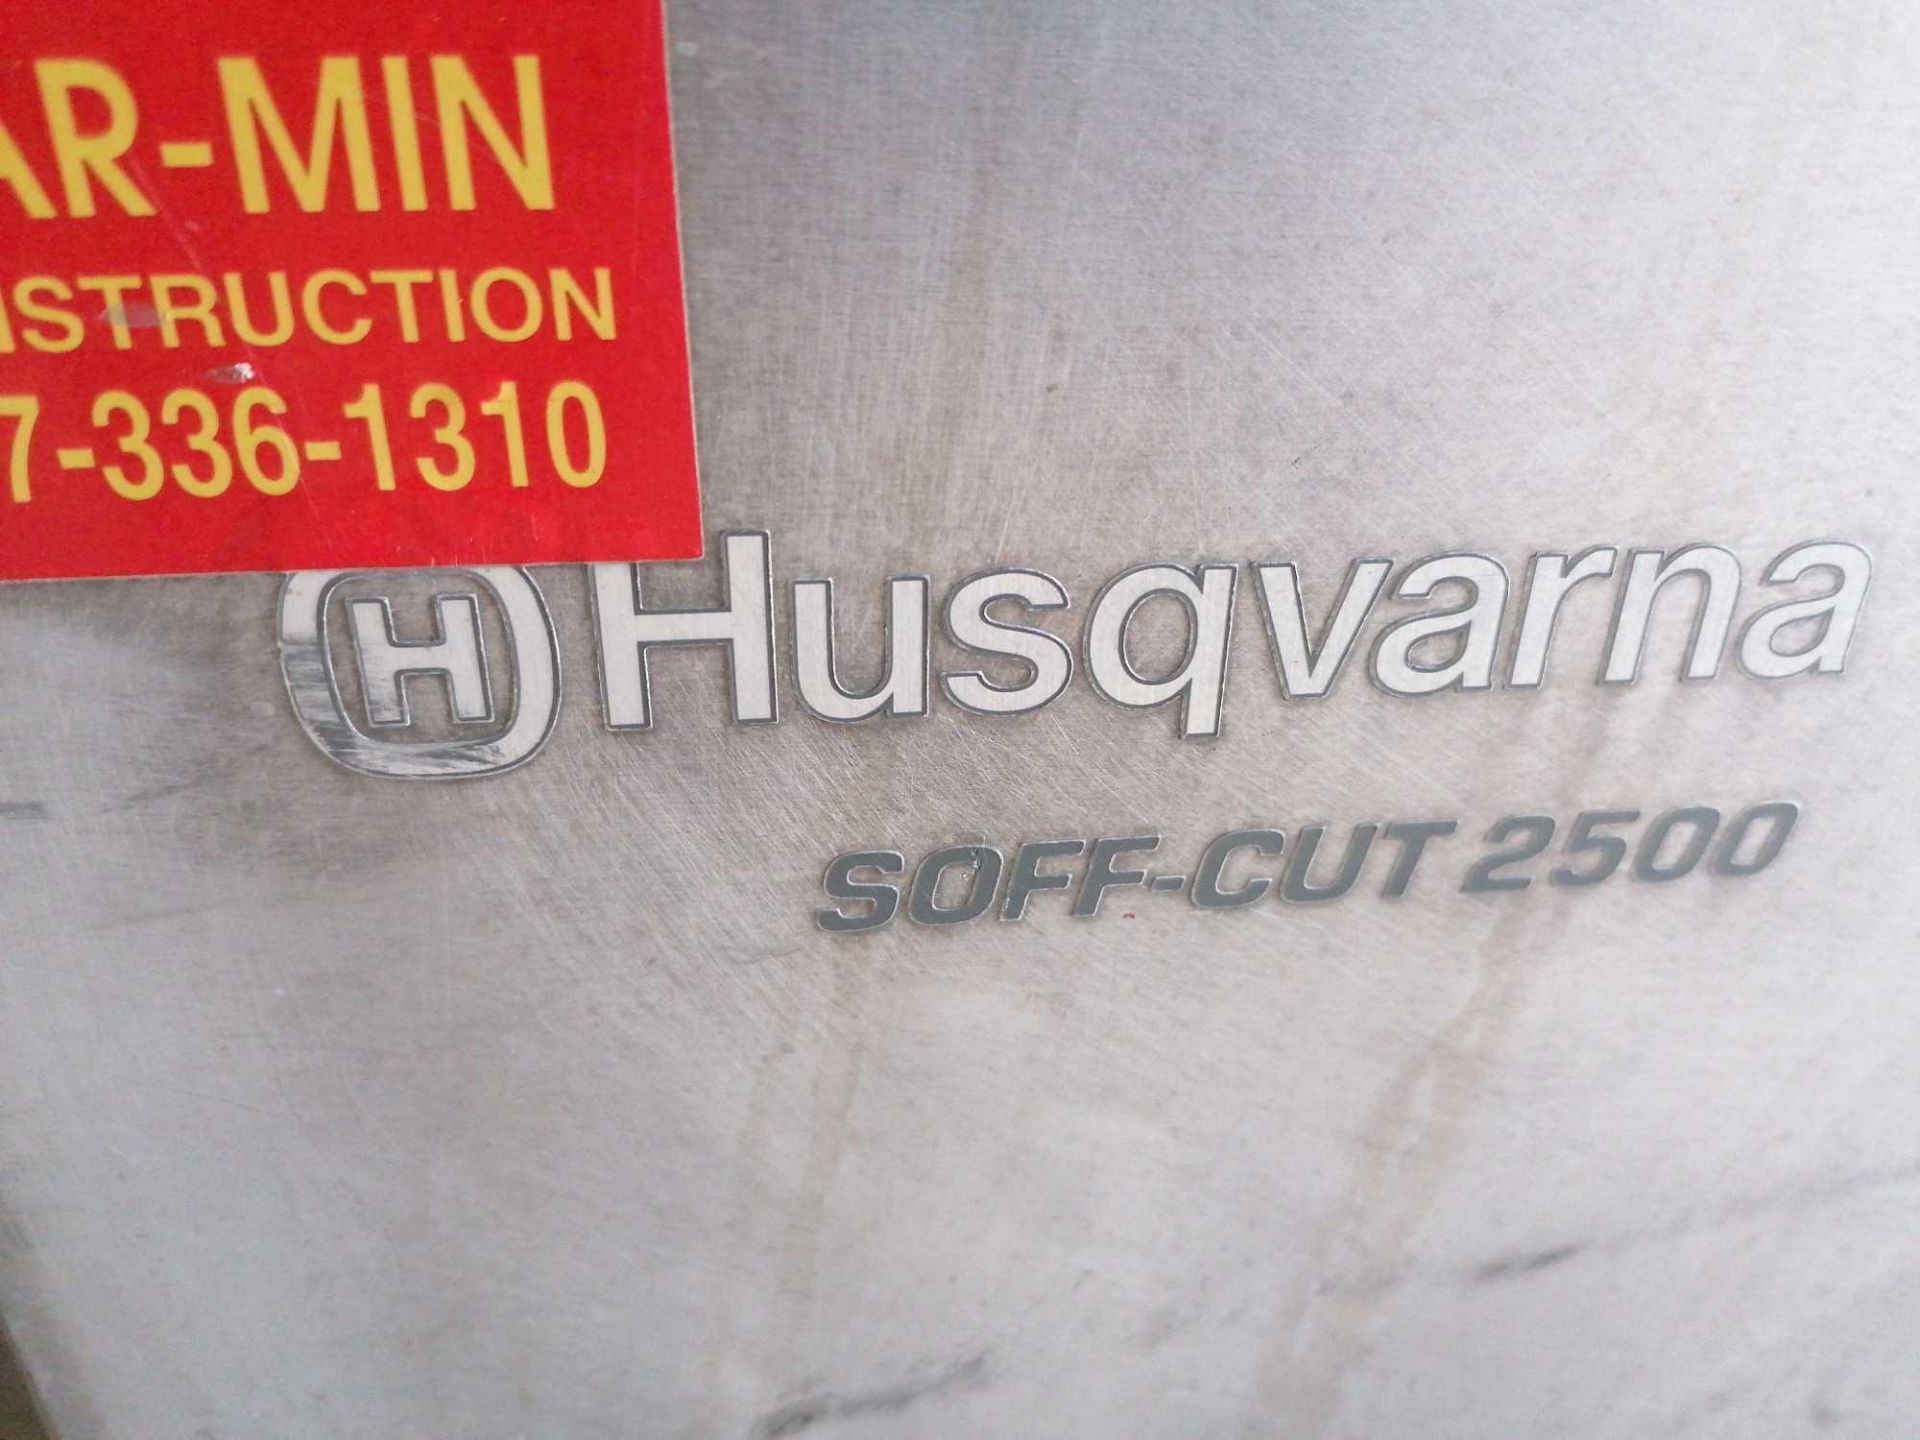 Husqvarna Soff-Cut 2500 Concrete Saw - Image 6 of 8